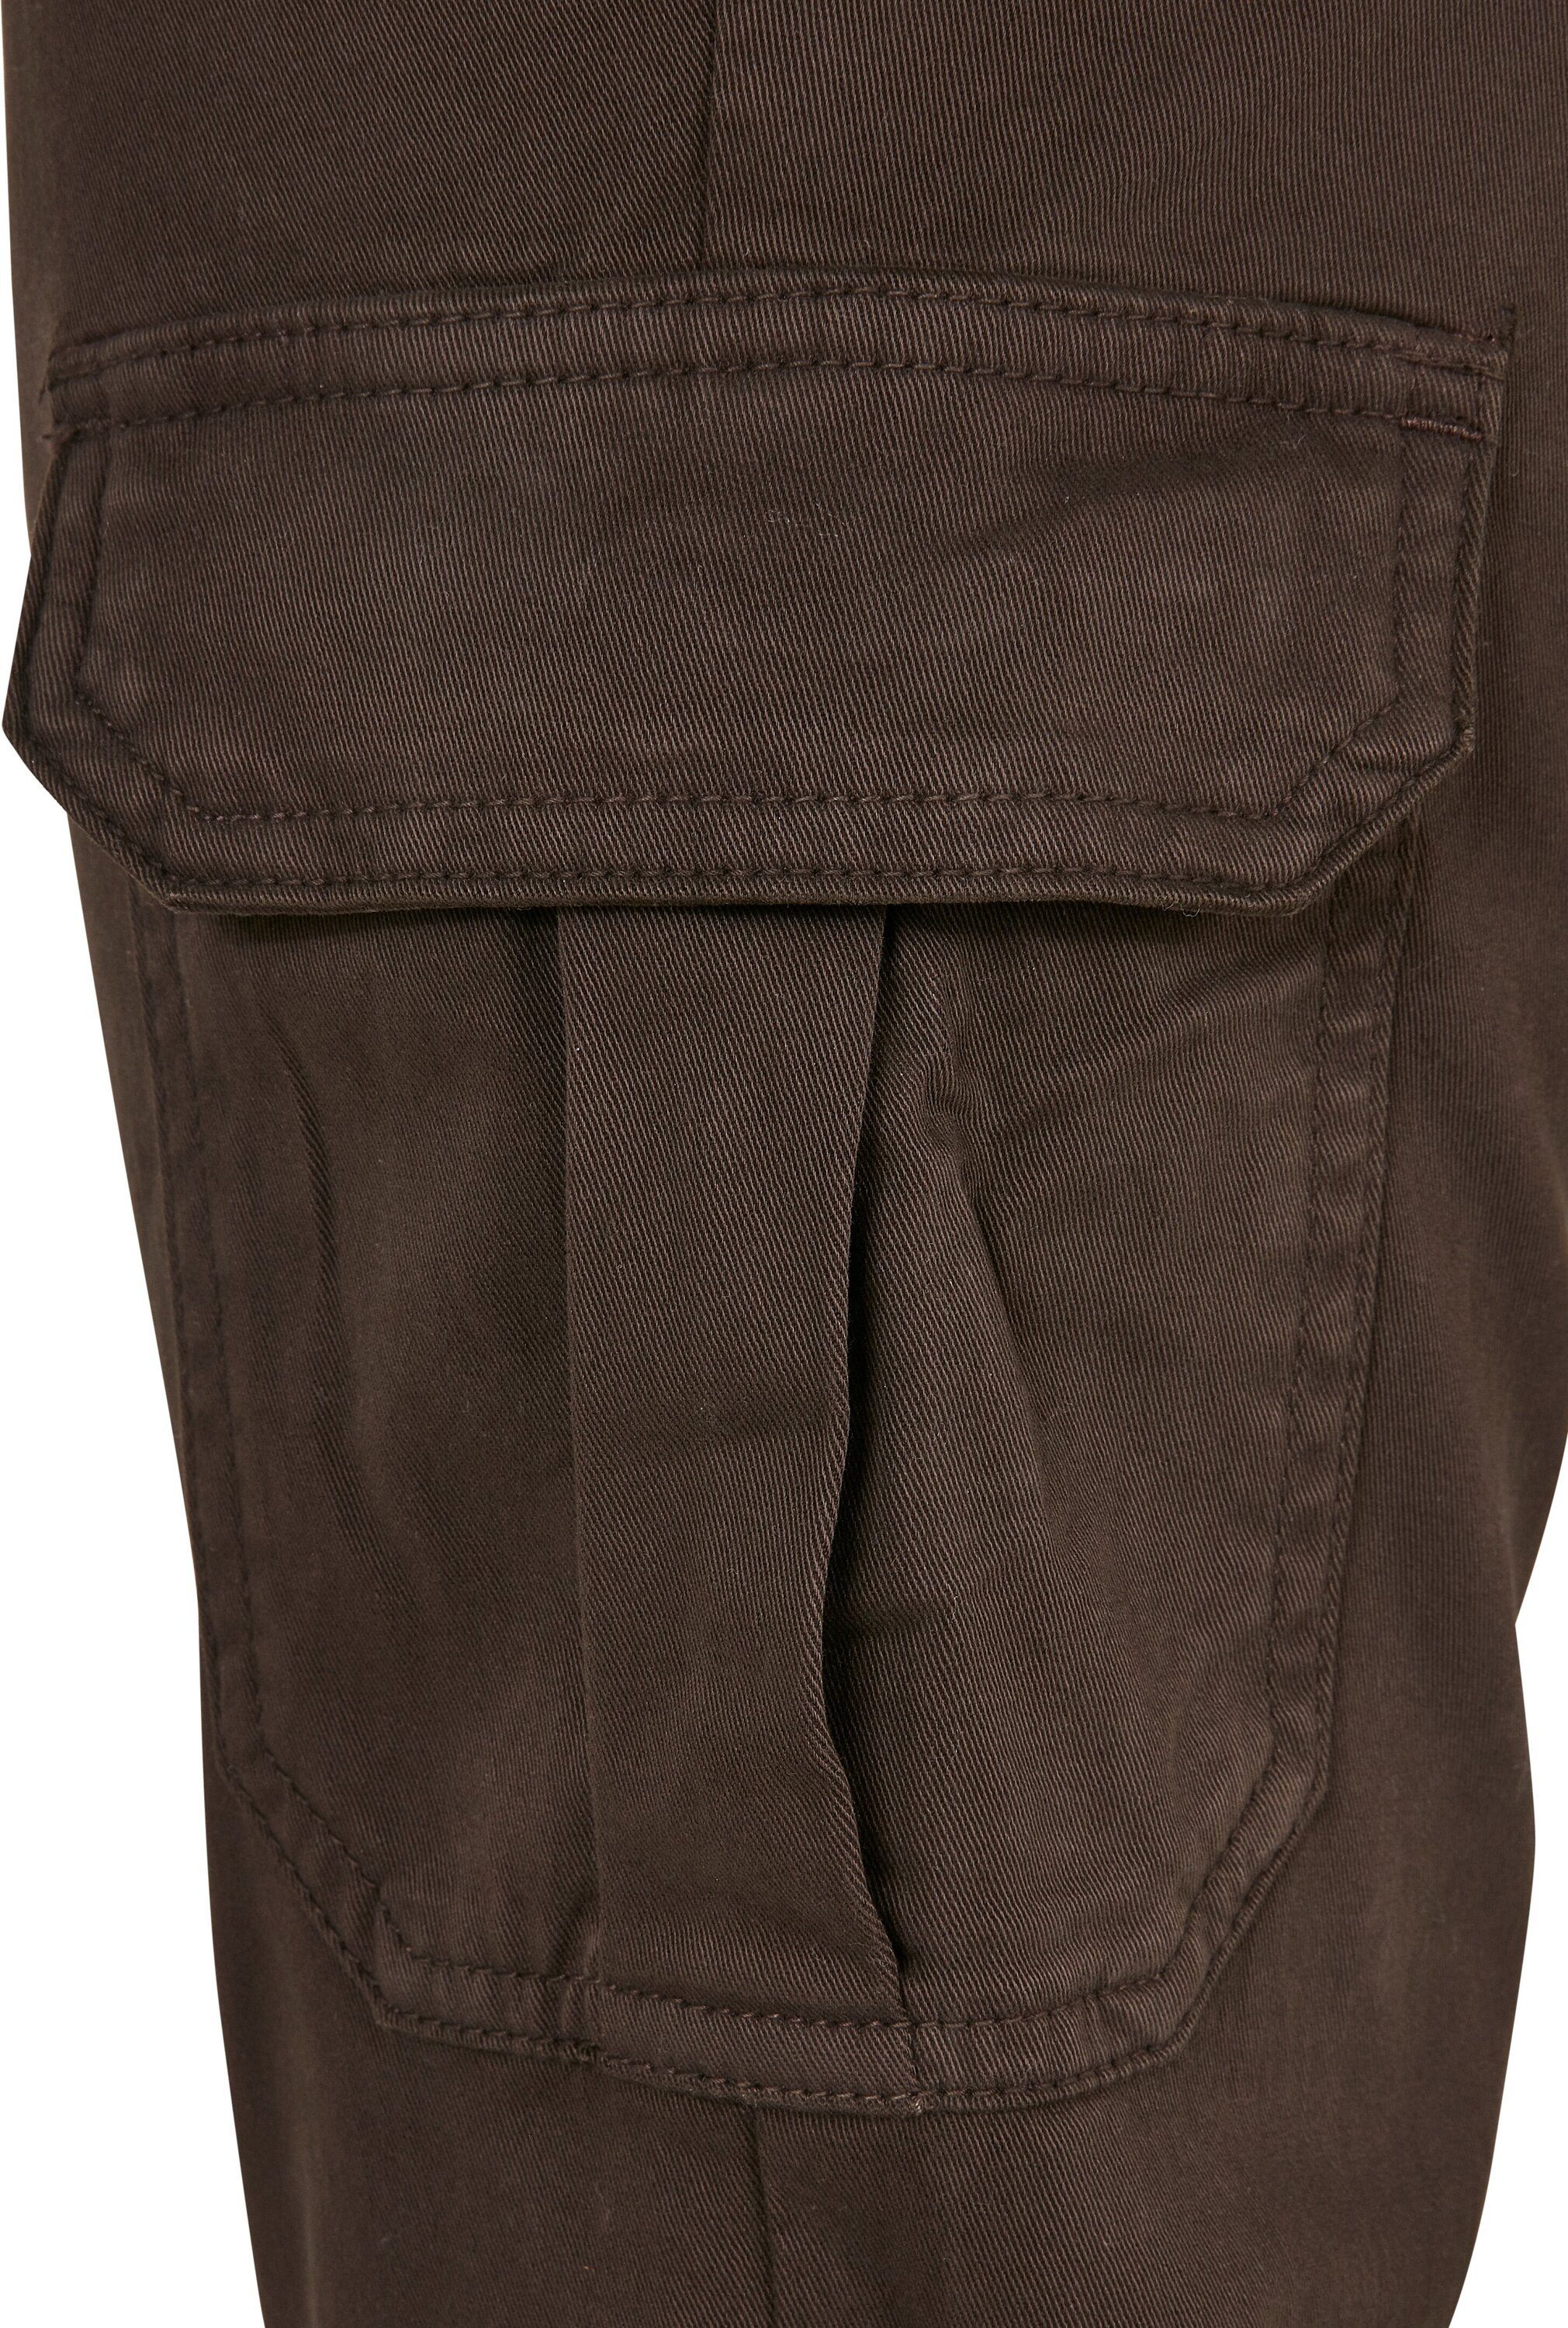 Waist brown URBAN Cargohose Ladies High Cargo Pants CLASSICS Damen (1-tlg)